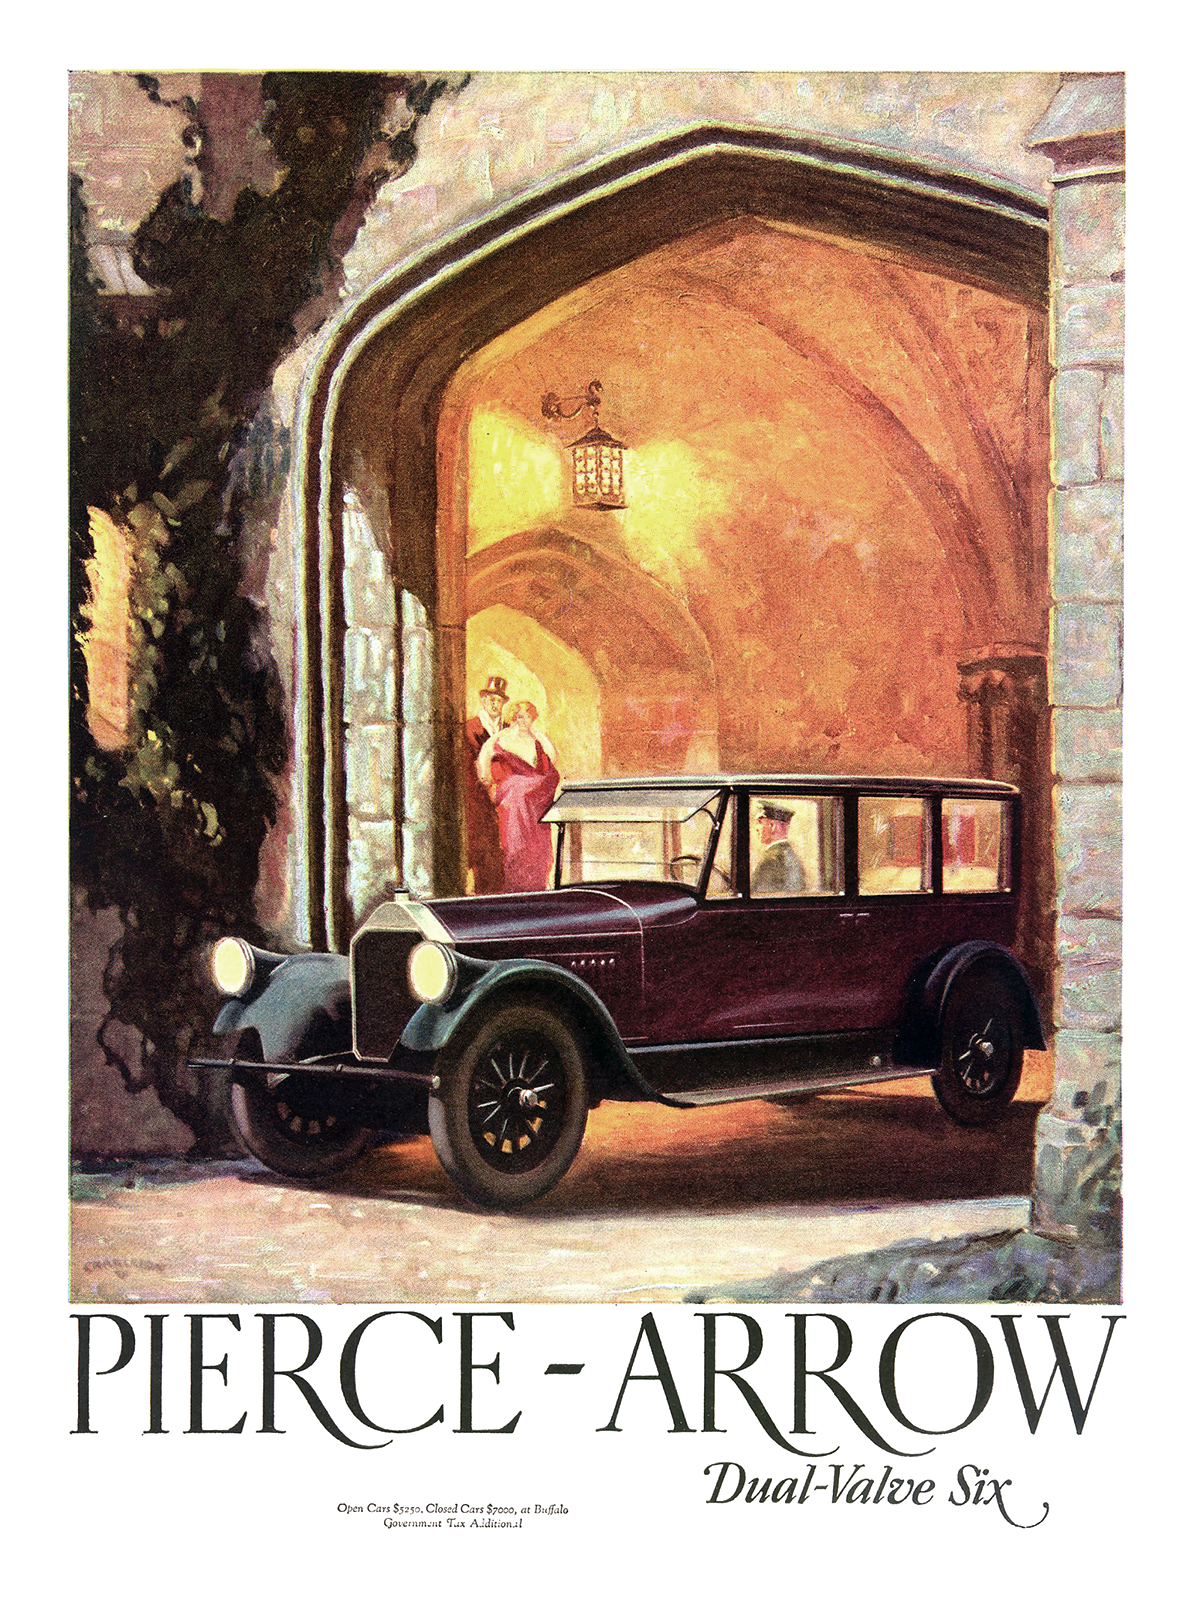 Pierce-Arrow Ad (May, 1926) – Illustrated by Malcolm Daniel Charleson